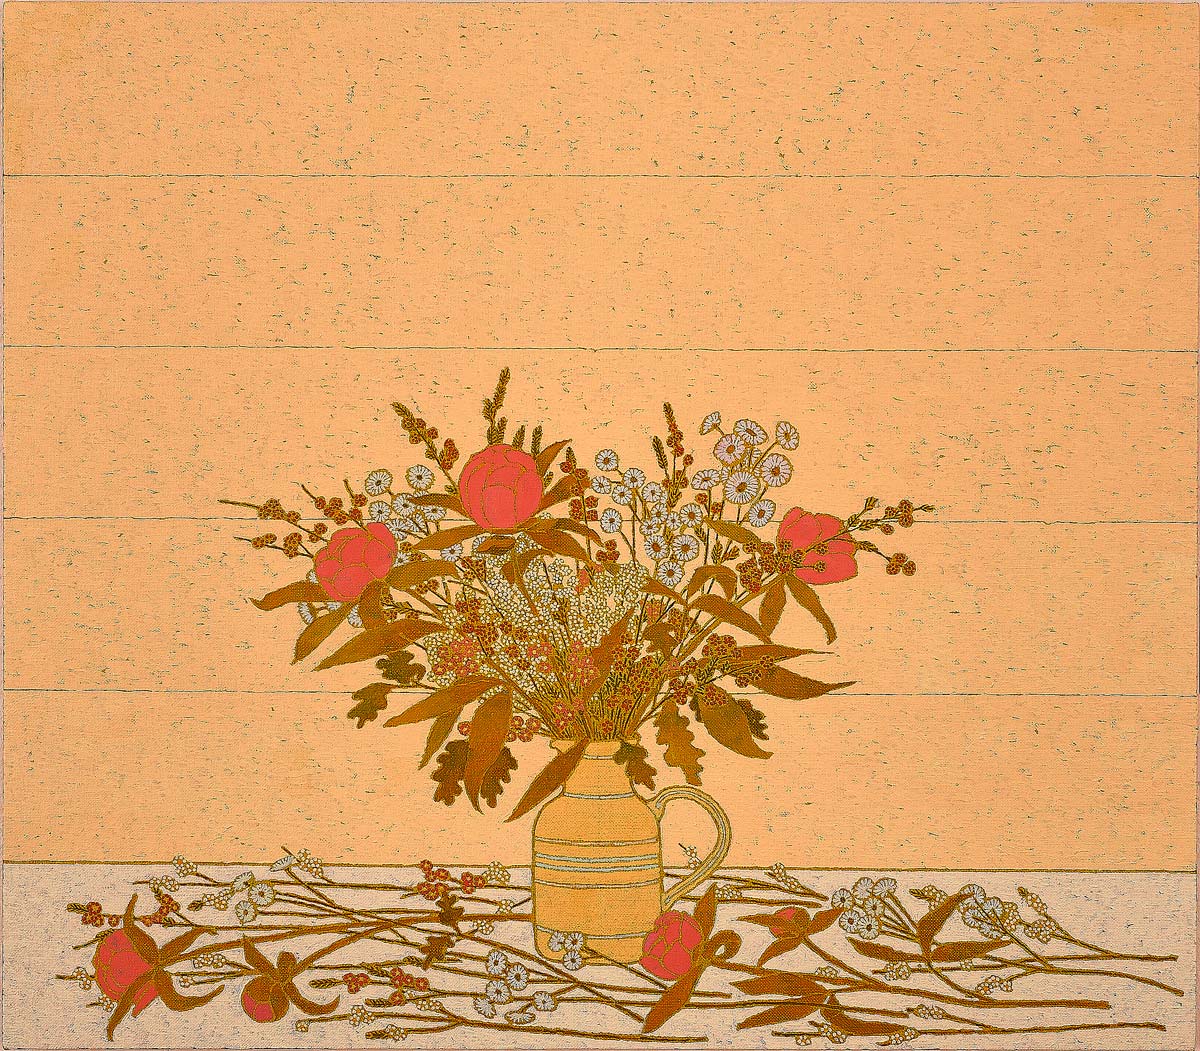 Berlin Flowers (Rhodes Vase), 70 x 80 cm, Oil on Linen, 2020, Stephen Chambers Studio